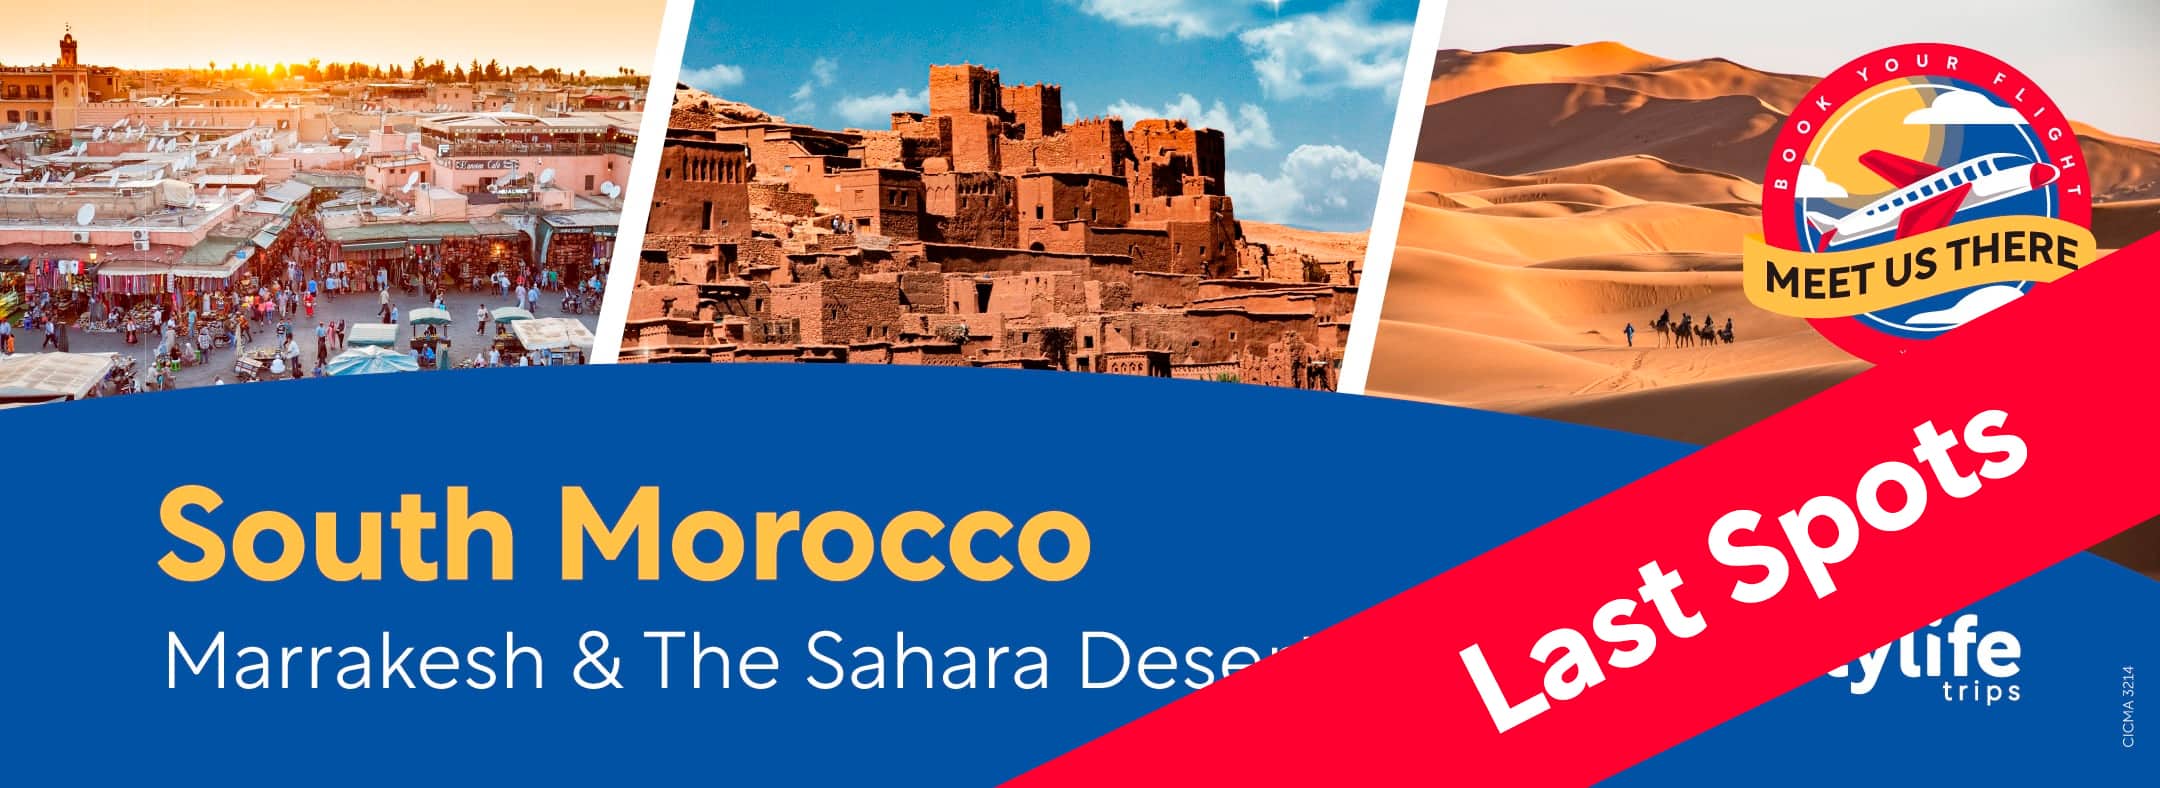 last-spots-south-morocco